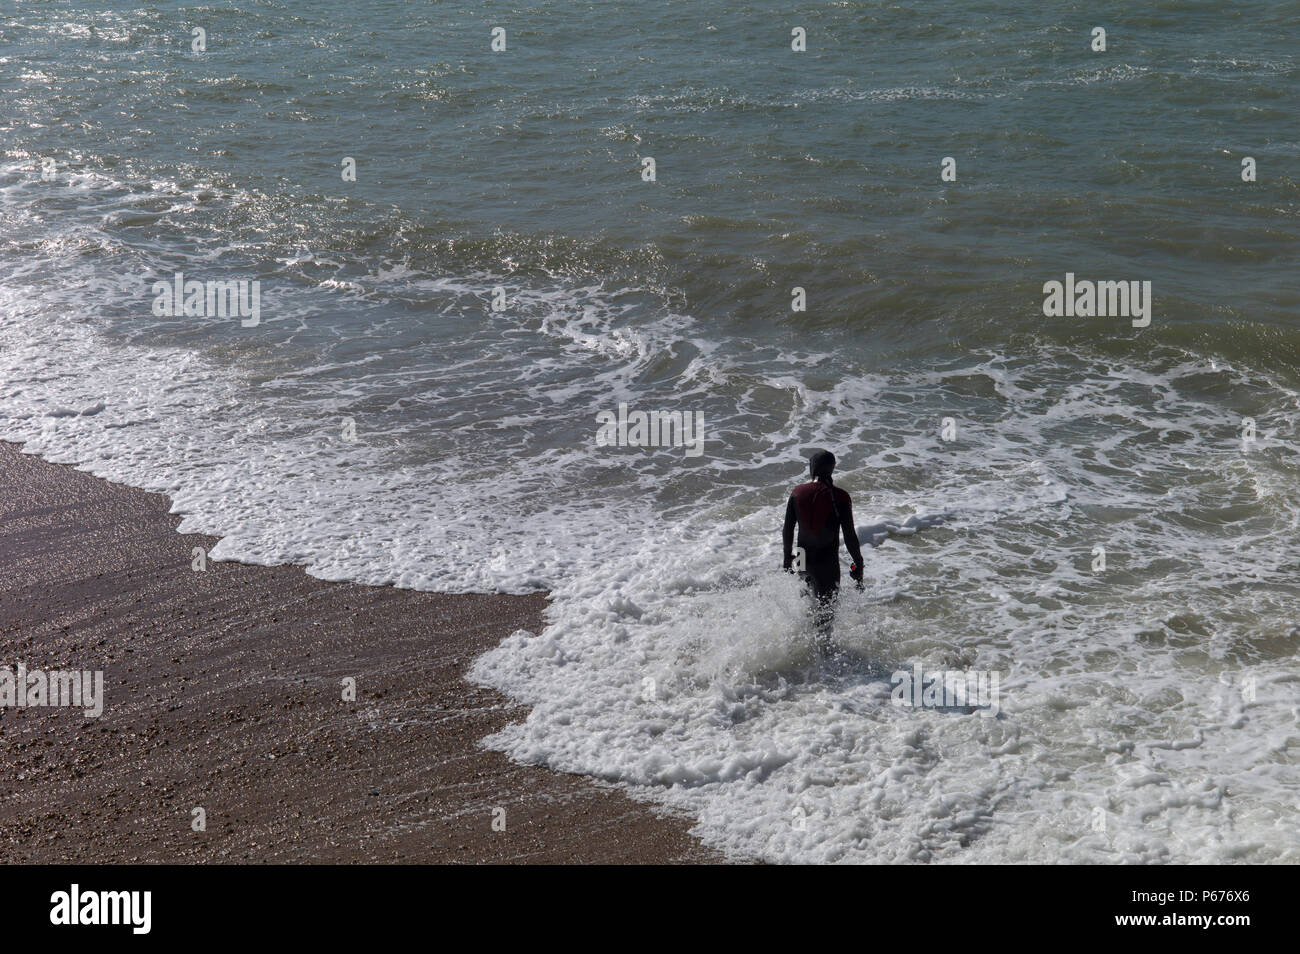 Man in wetsuit preparing to swim in rough water, Brighton, UK Stock Photo